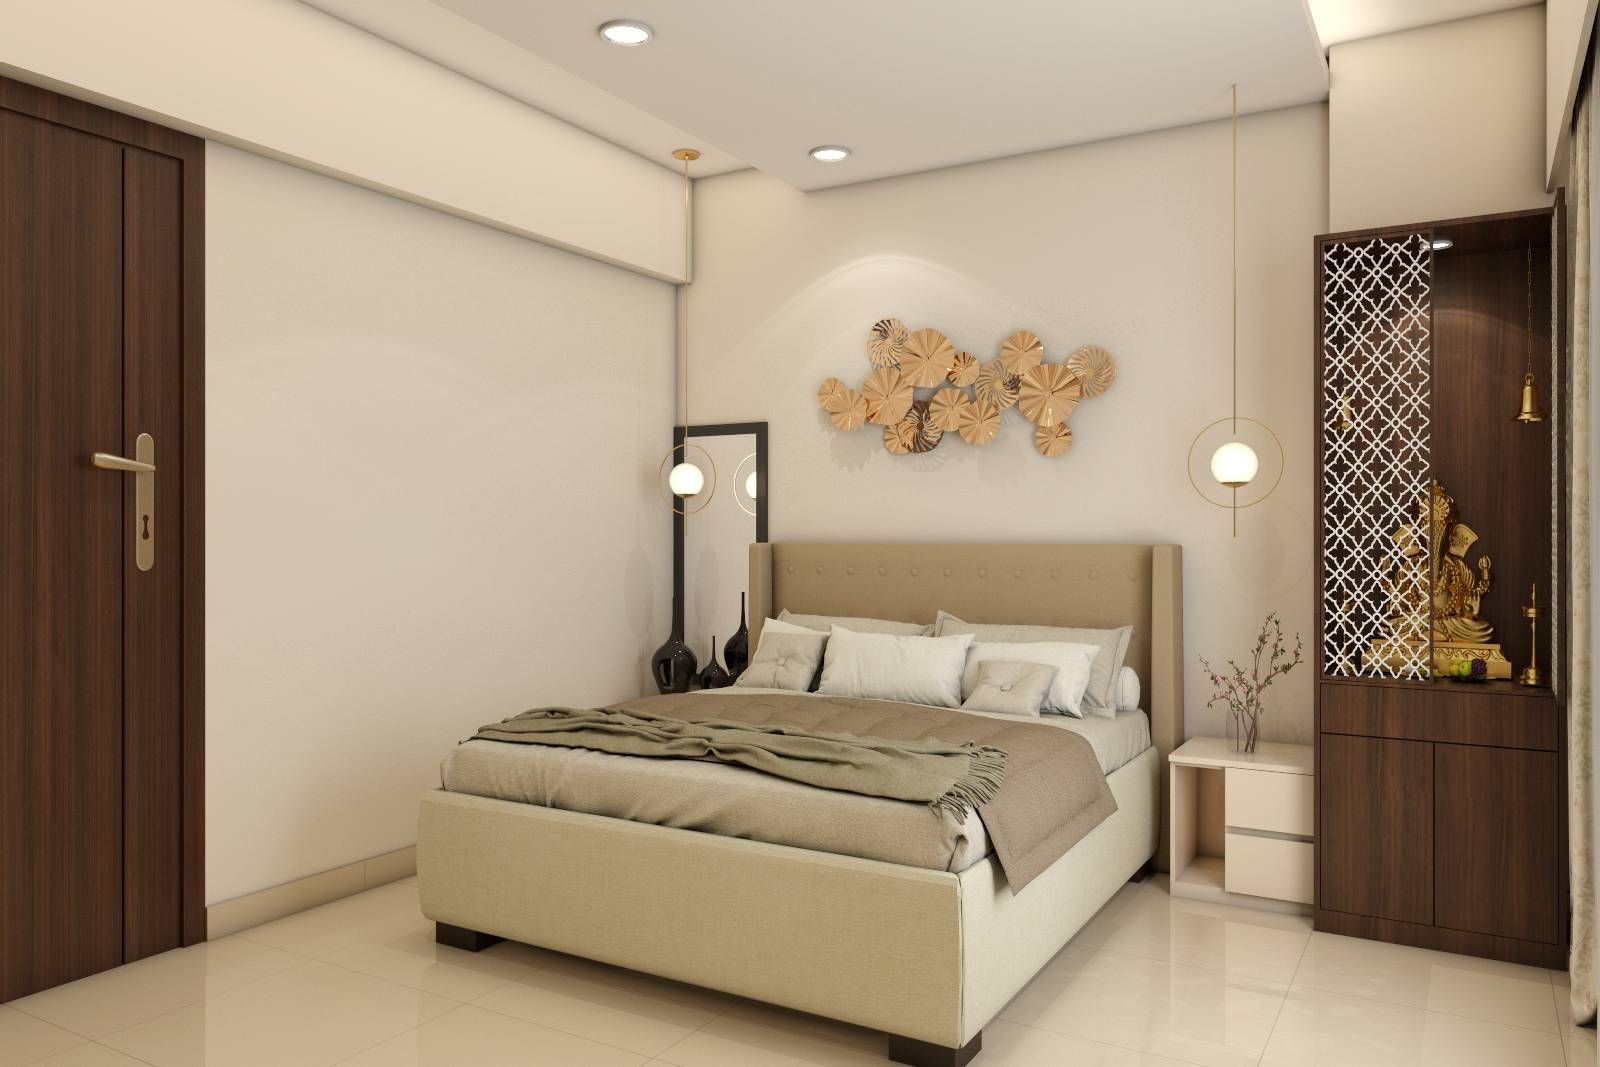 Compact Kid's Bedroom Design With Pooja Unit